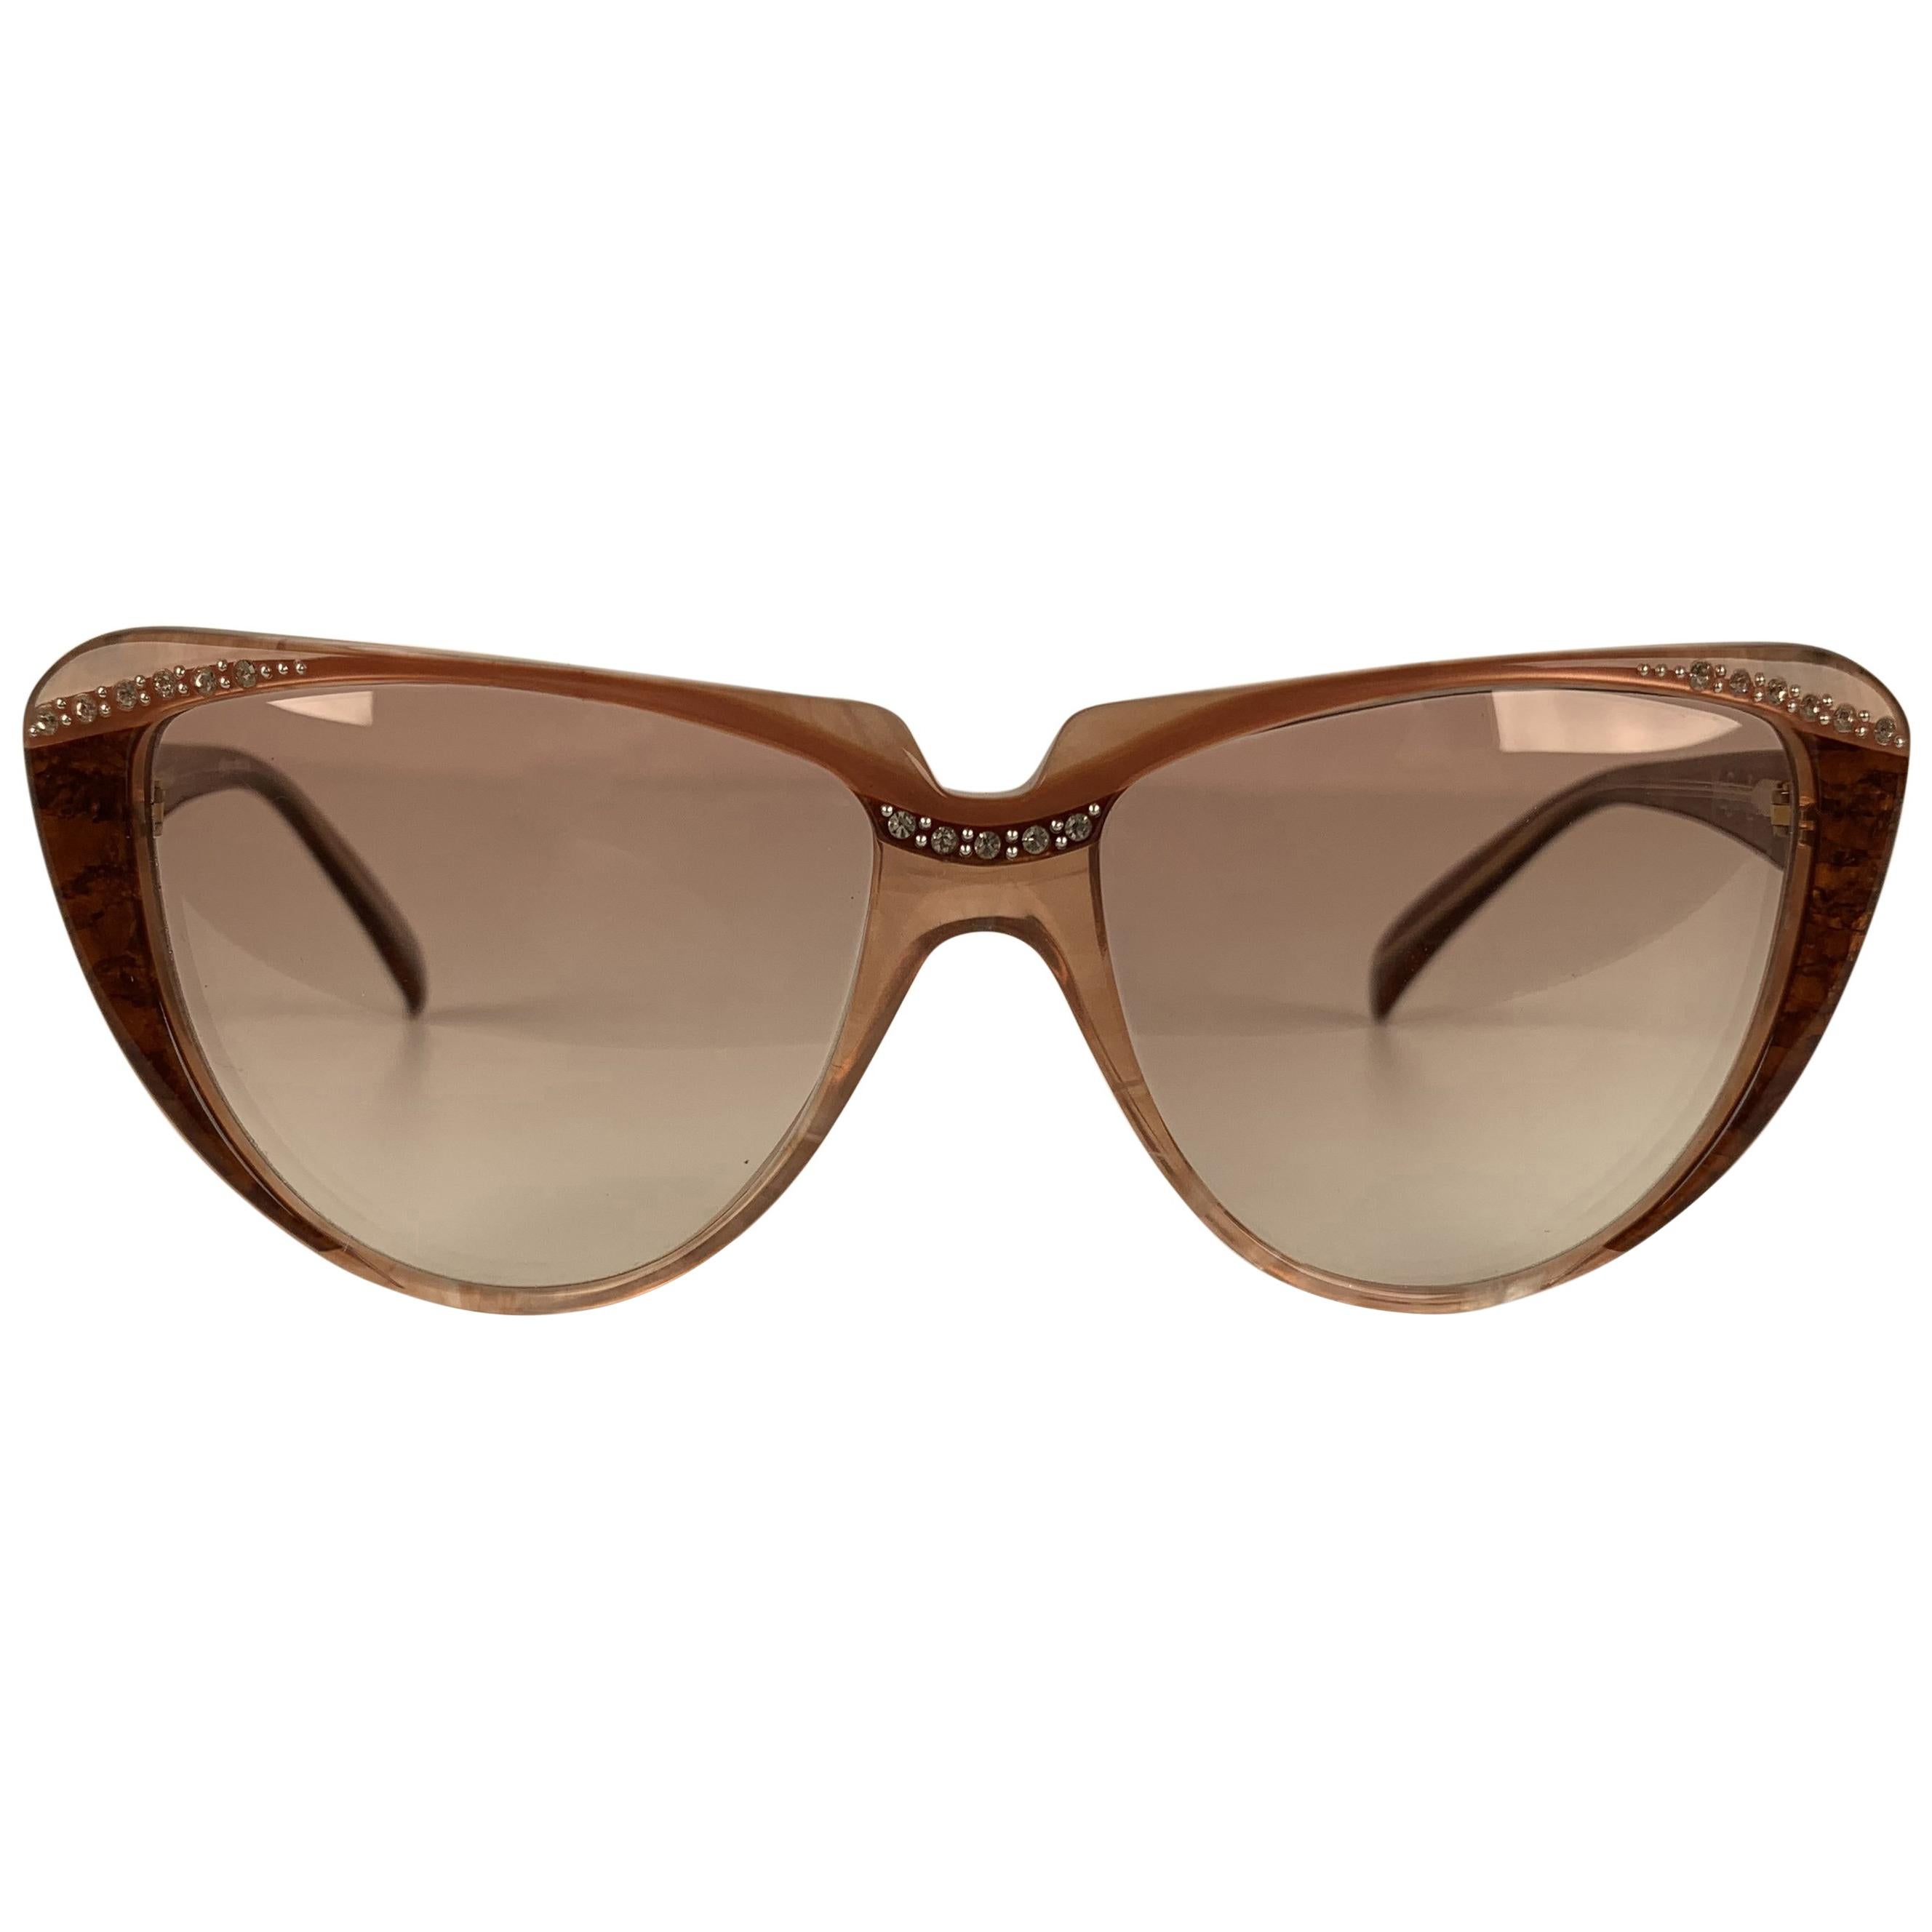 Yves Saint Laurent Vintage Cat Eye Sunglasses Rhinestones 8 704 PO 74